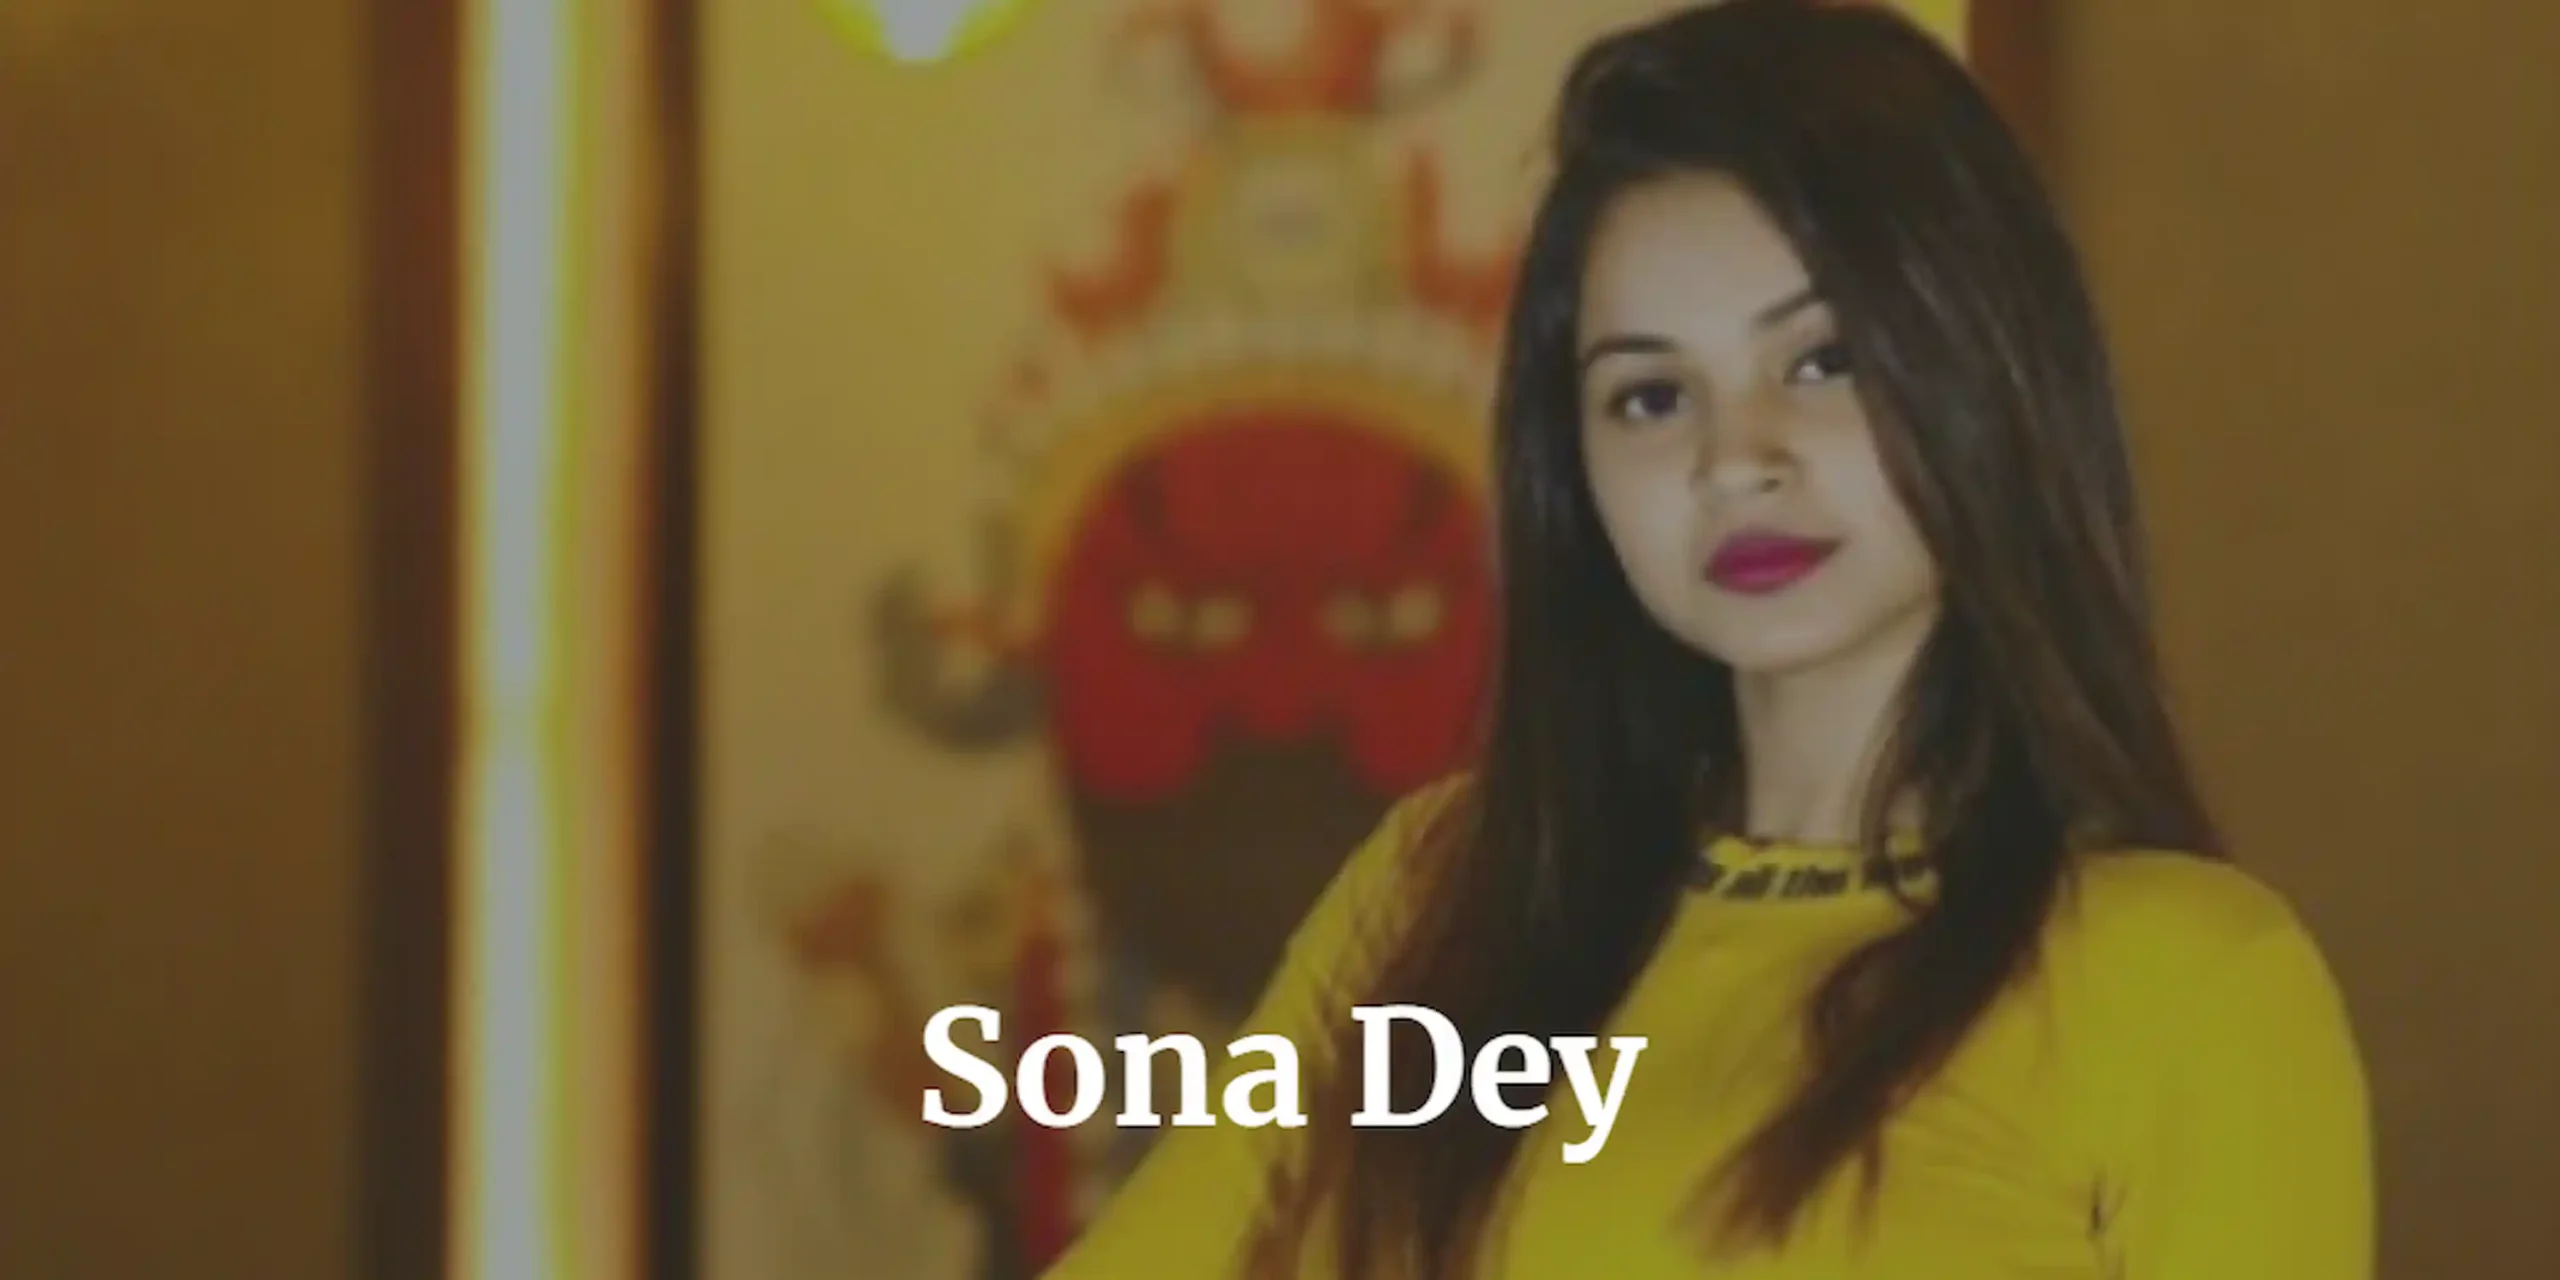 Sona Dey Biography